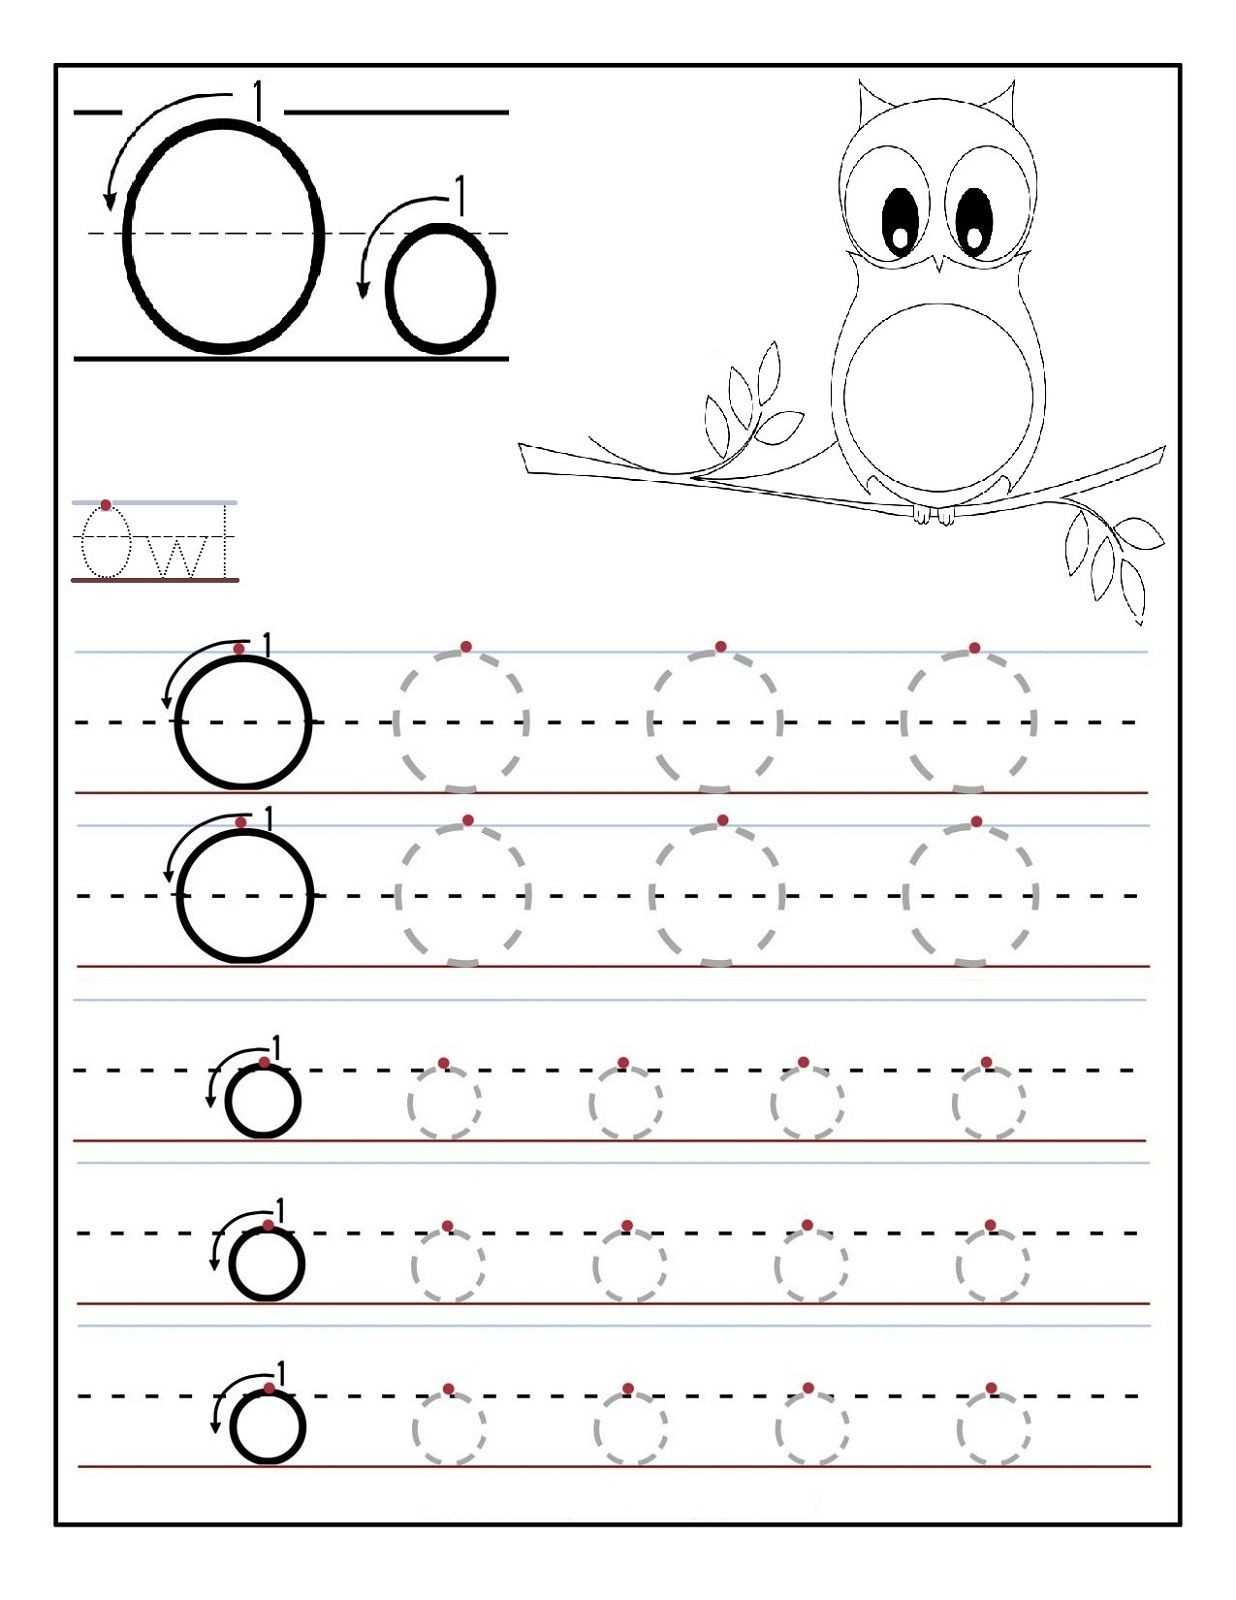 Sentence Building Worksheets for Kindergarten as Well as Cursive Writing Worksheets Pinterest Refrence Letter O Worksheets